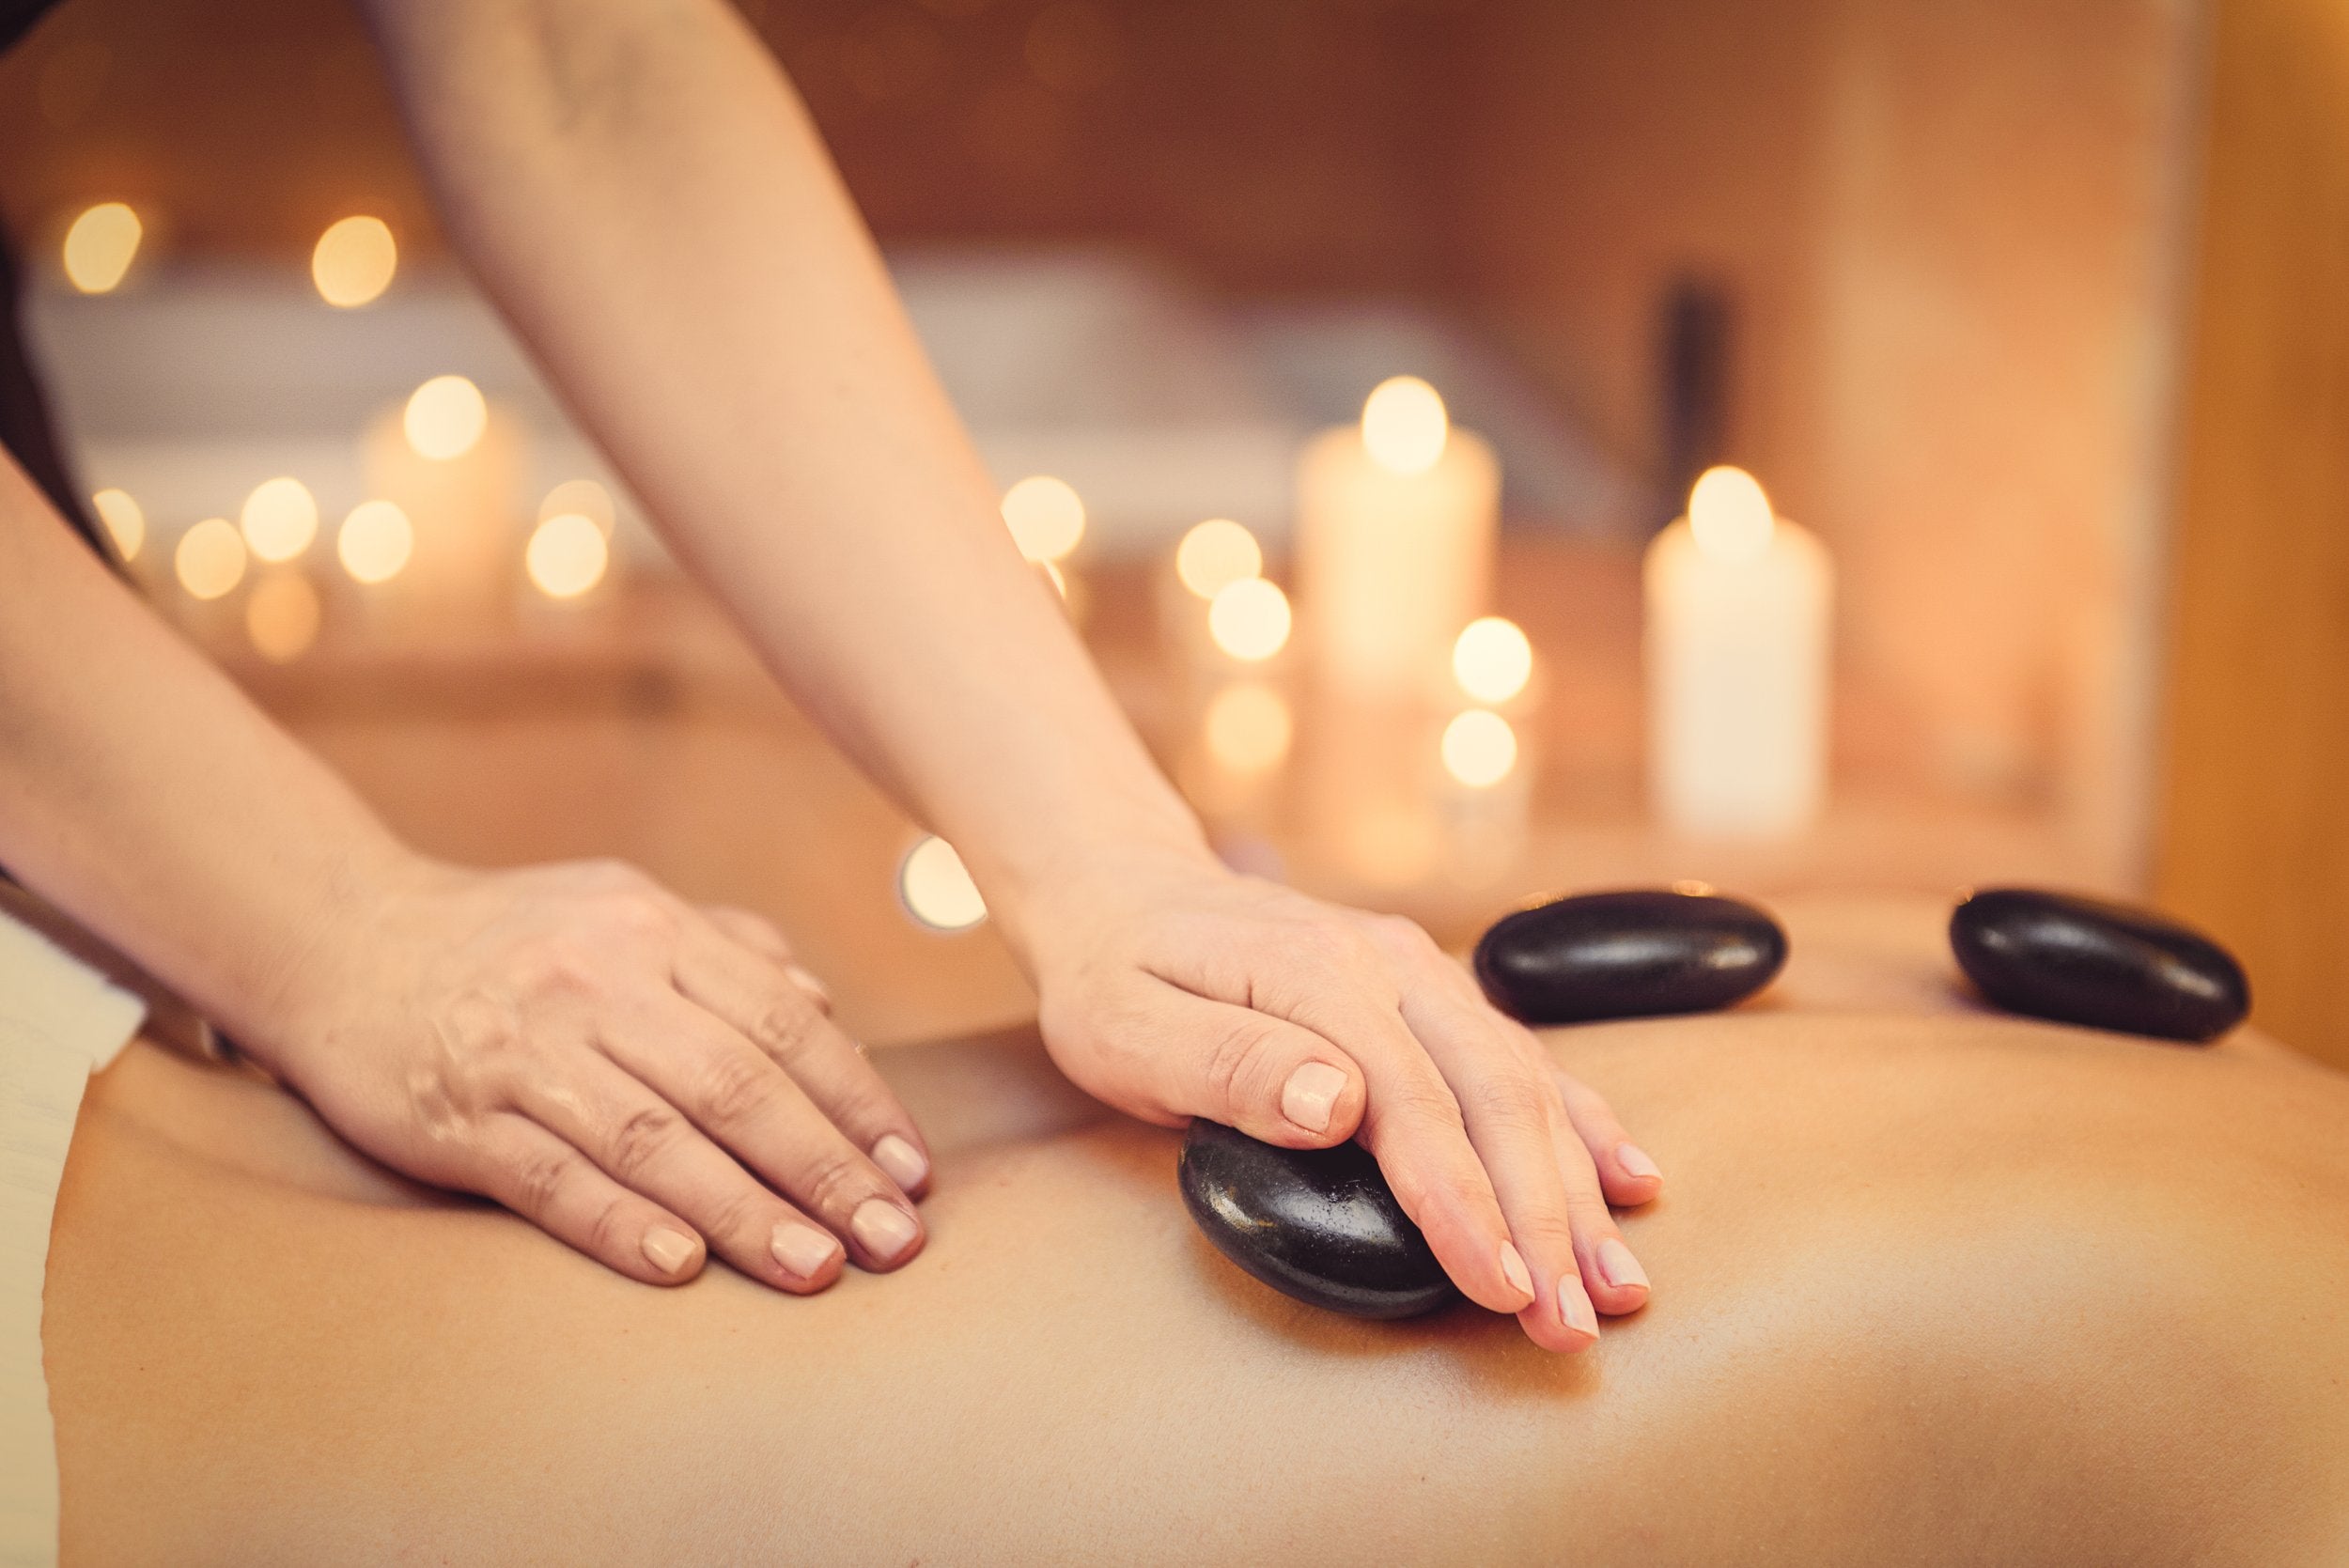 Benefits of Hot Stones Massage